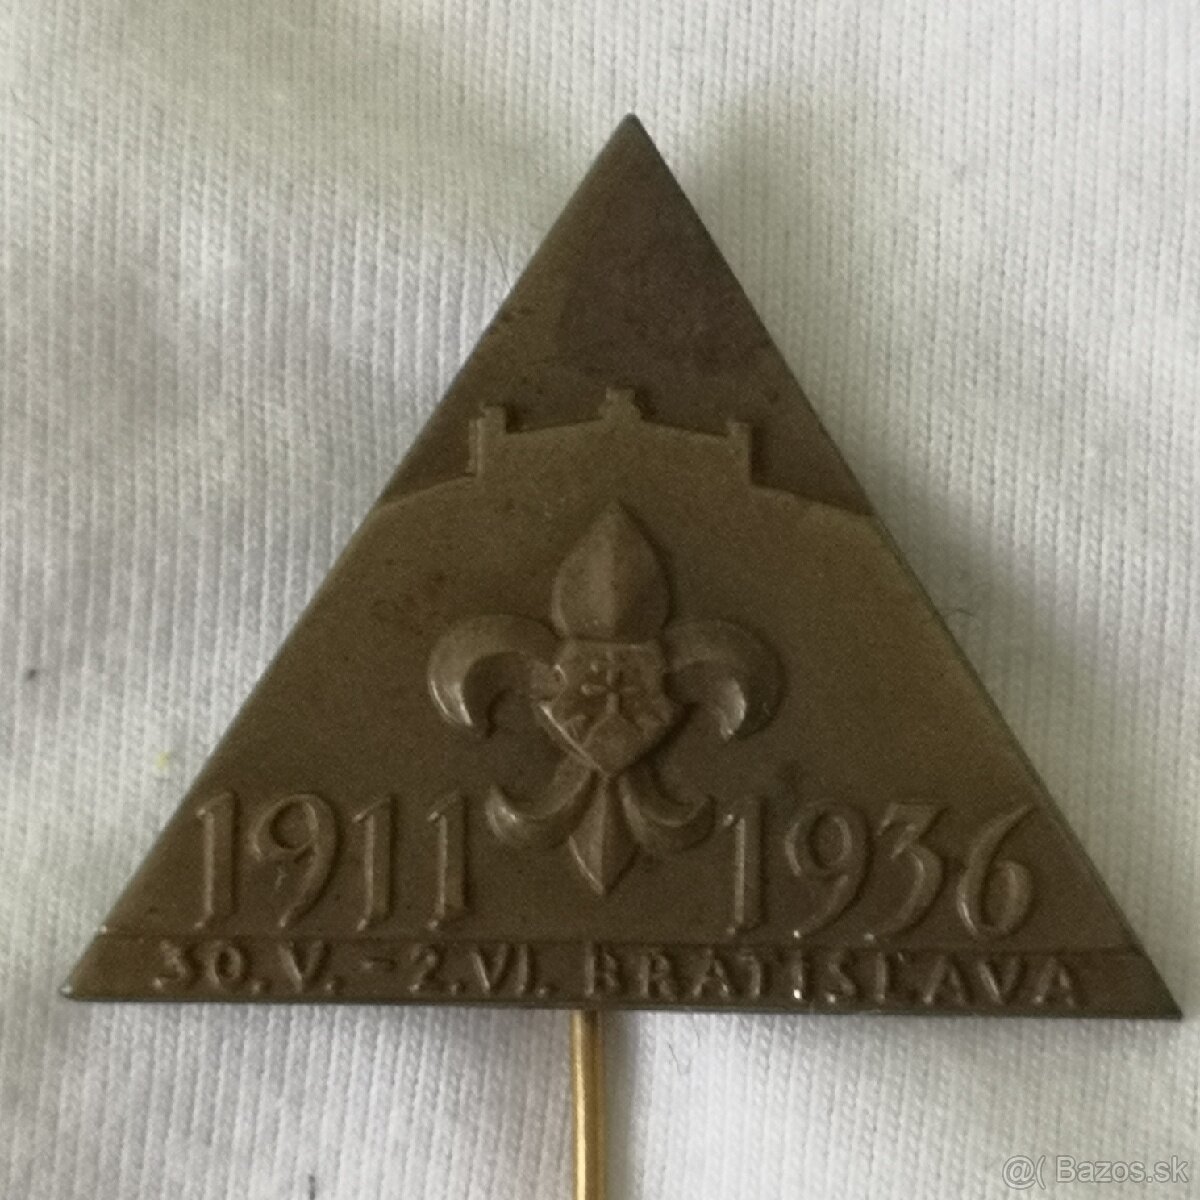 Slovenský skaut odznak Bratislava